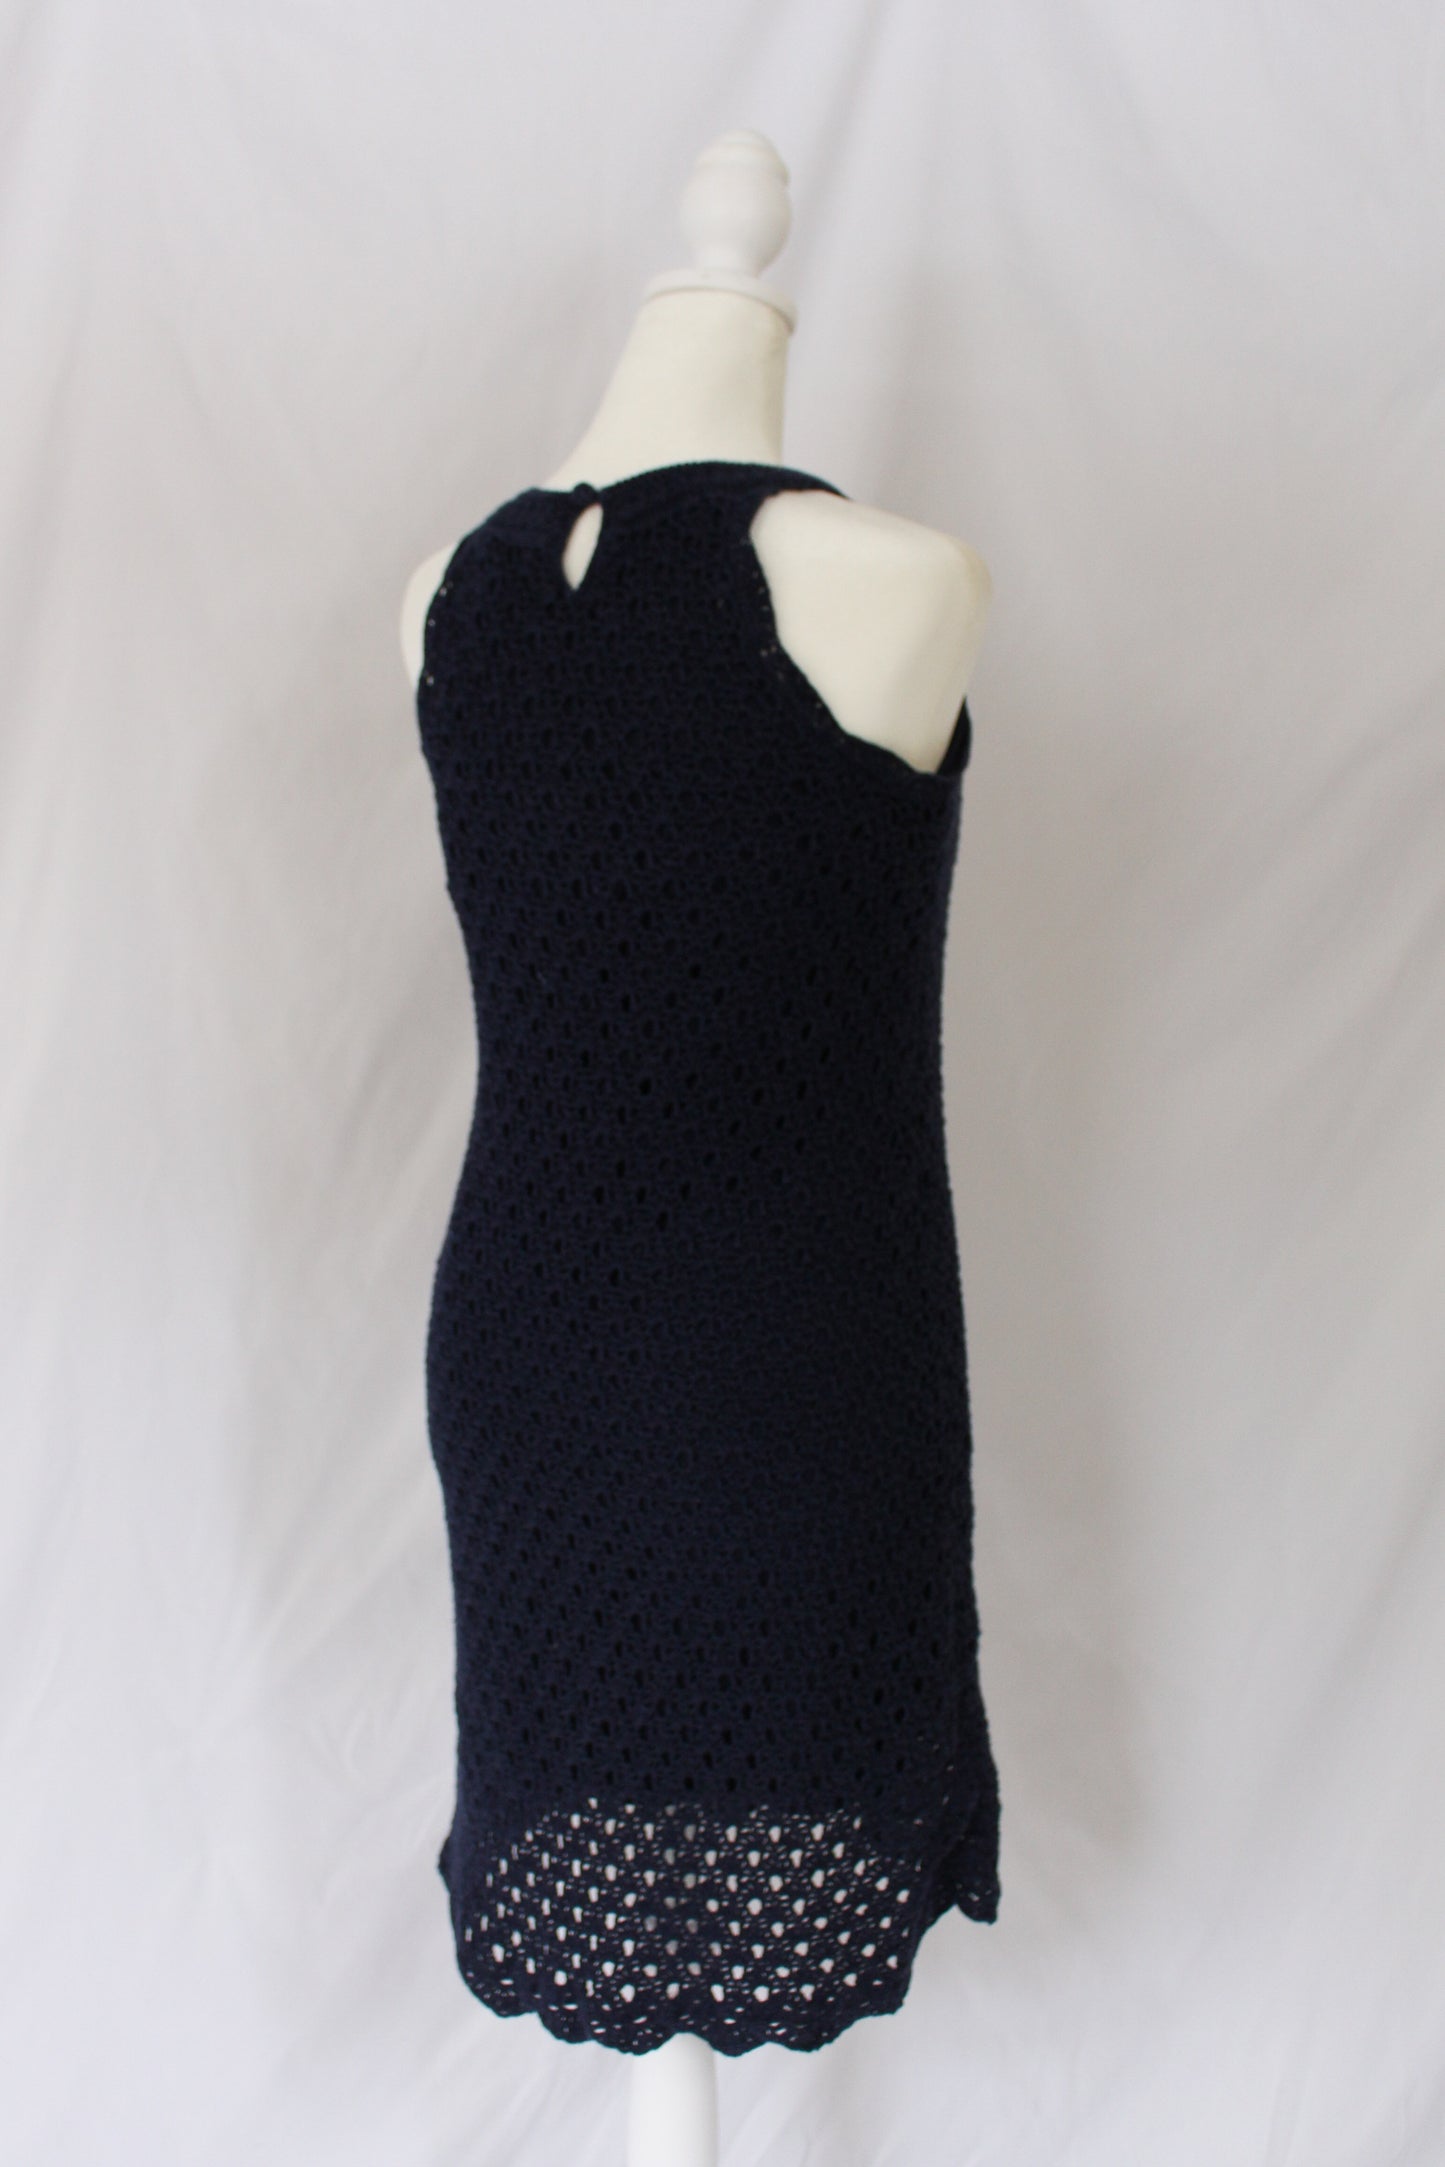 Lilly Pulitzer Navy Crochet Dress